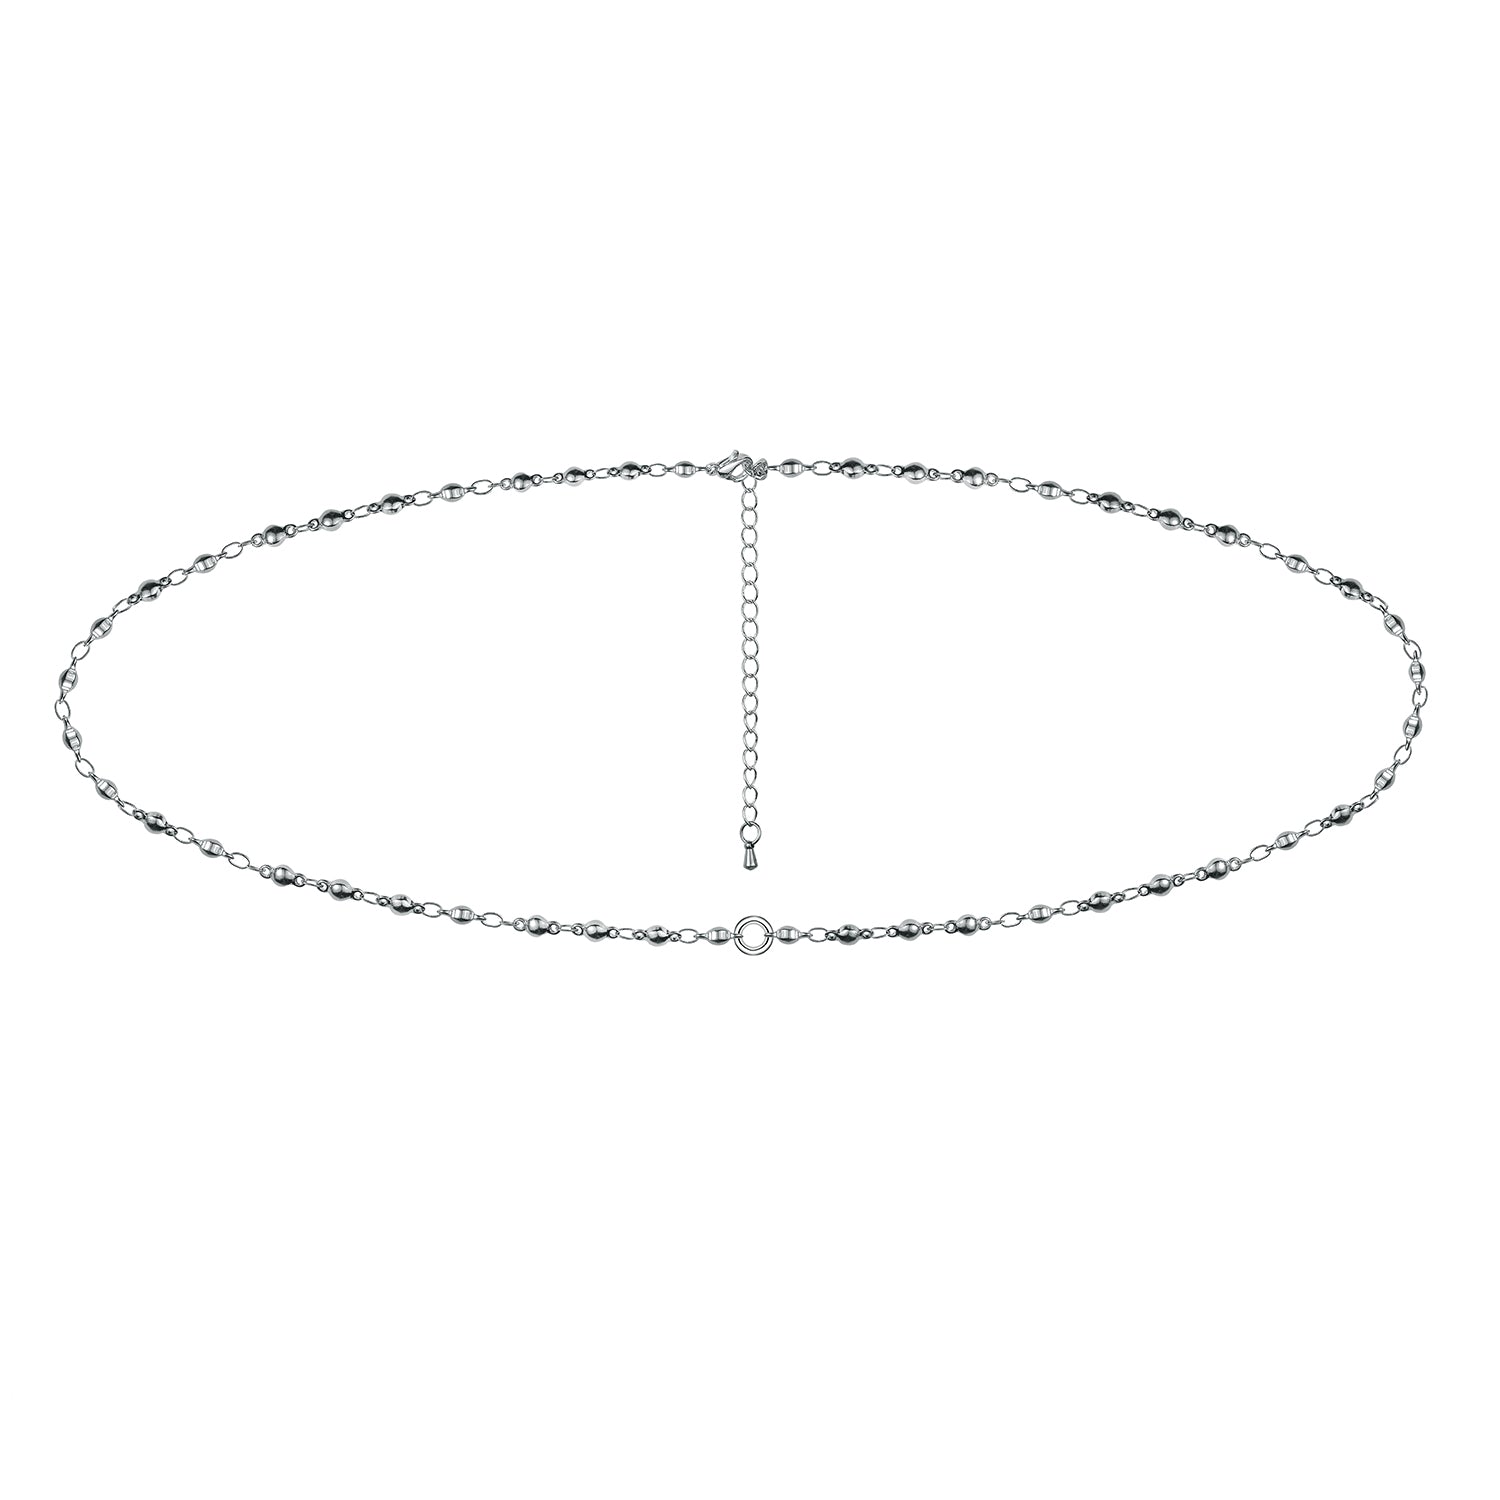 zs-lantern-beads-belly-button-ring-with-waist-chain-stainless-steel-beach-bikini-chain